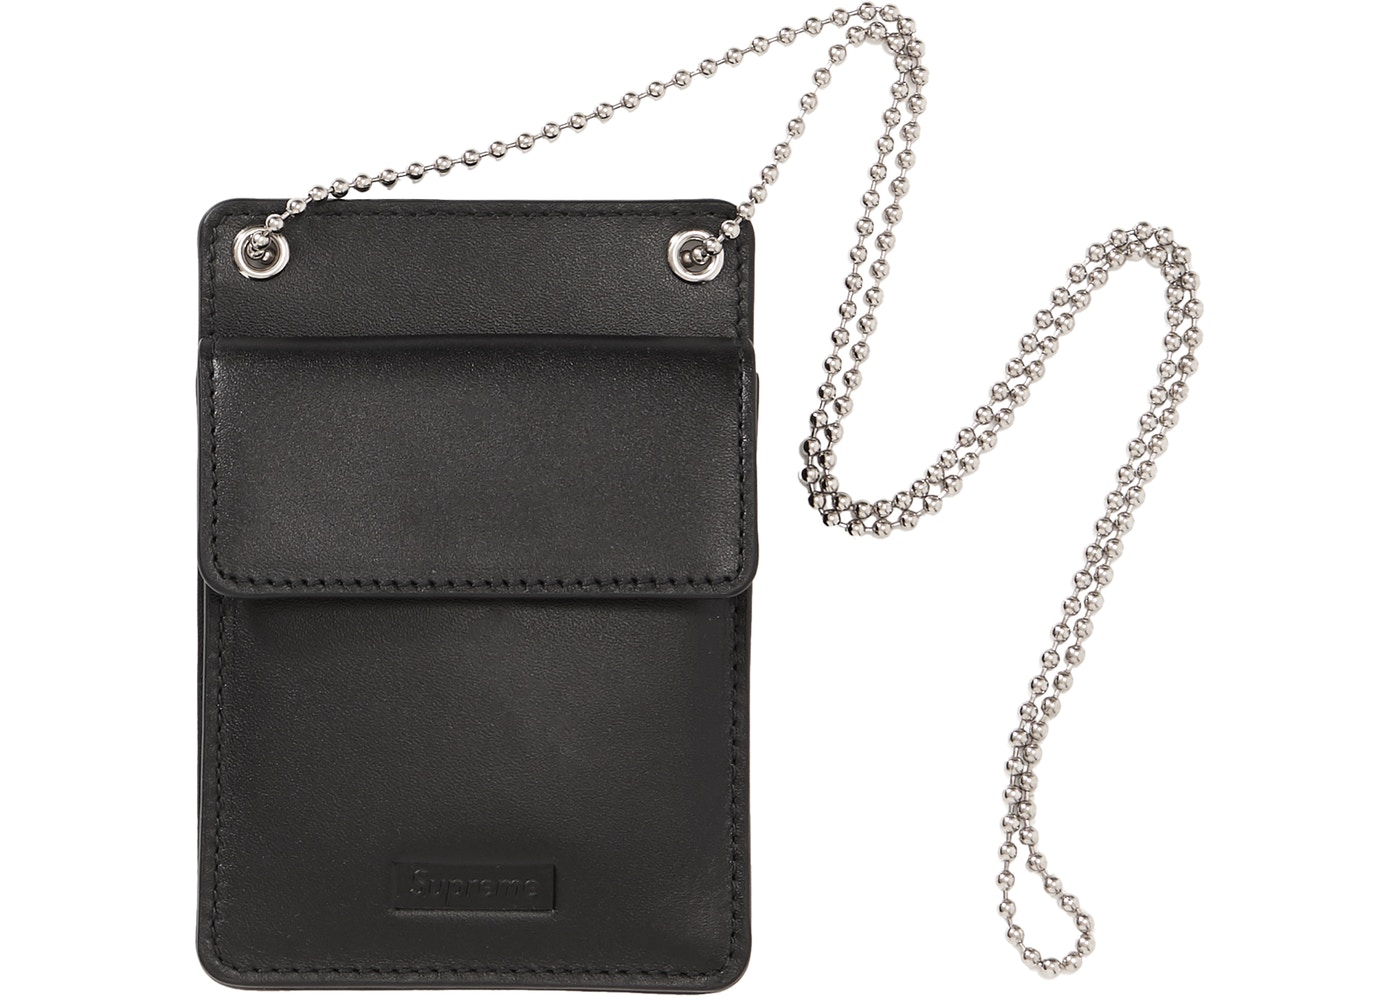 Supreme Leather ID Holder + Wallet Black - StockX News